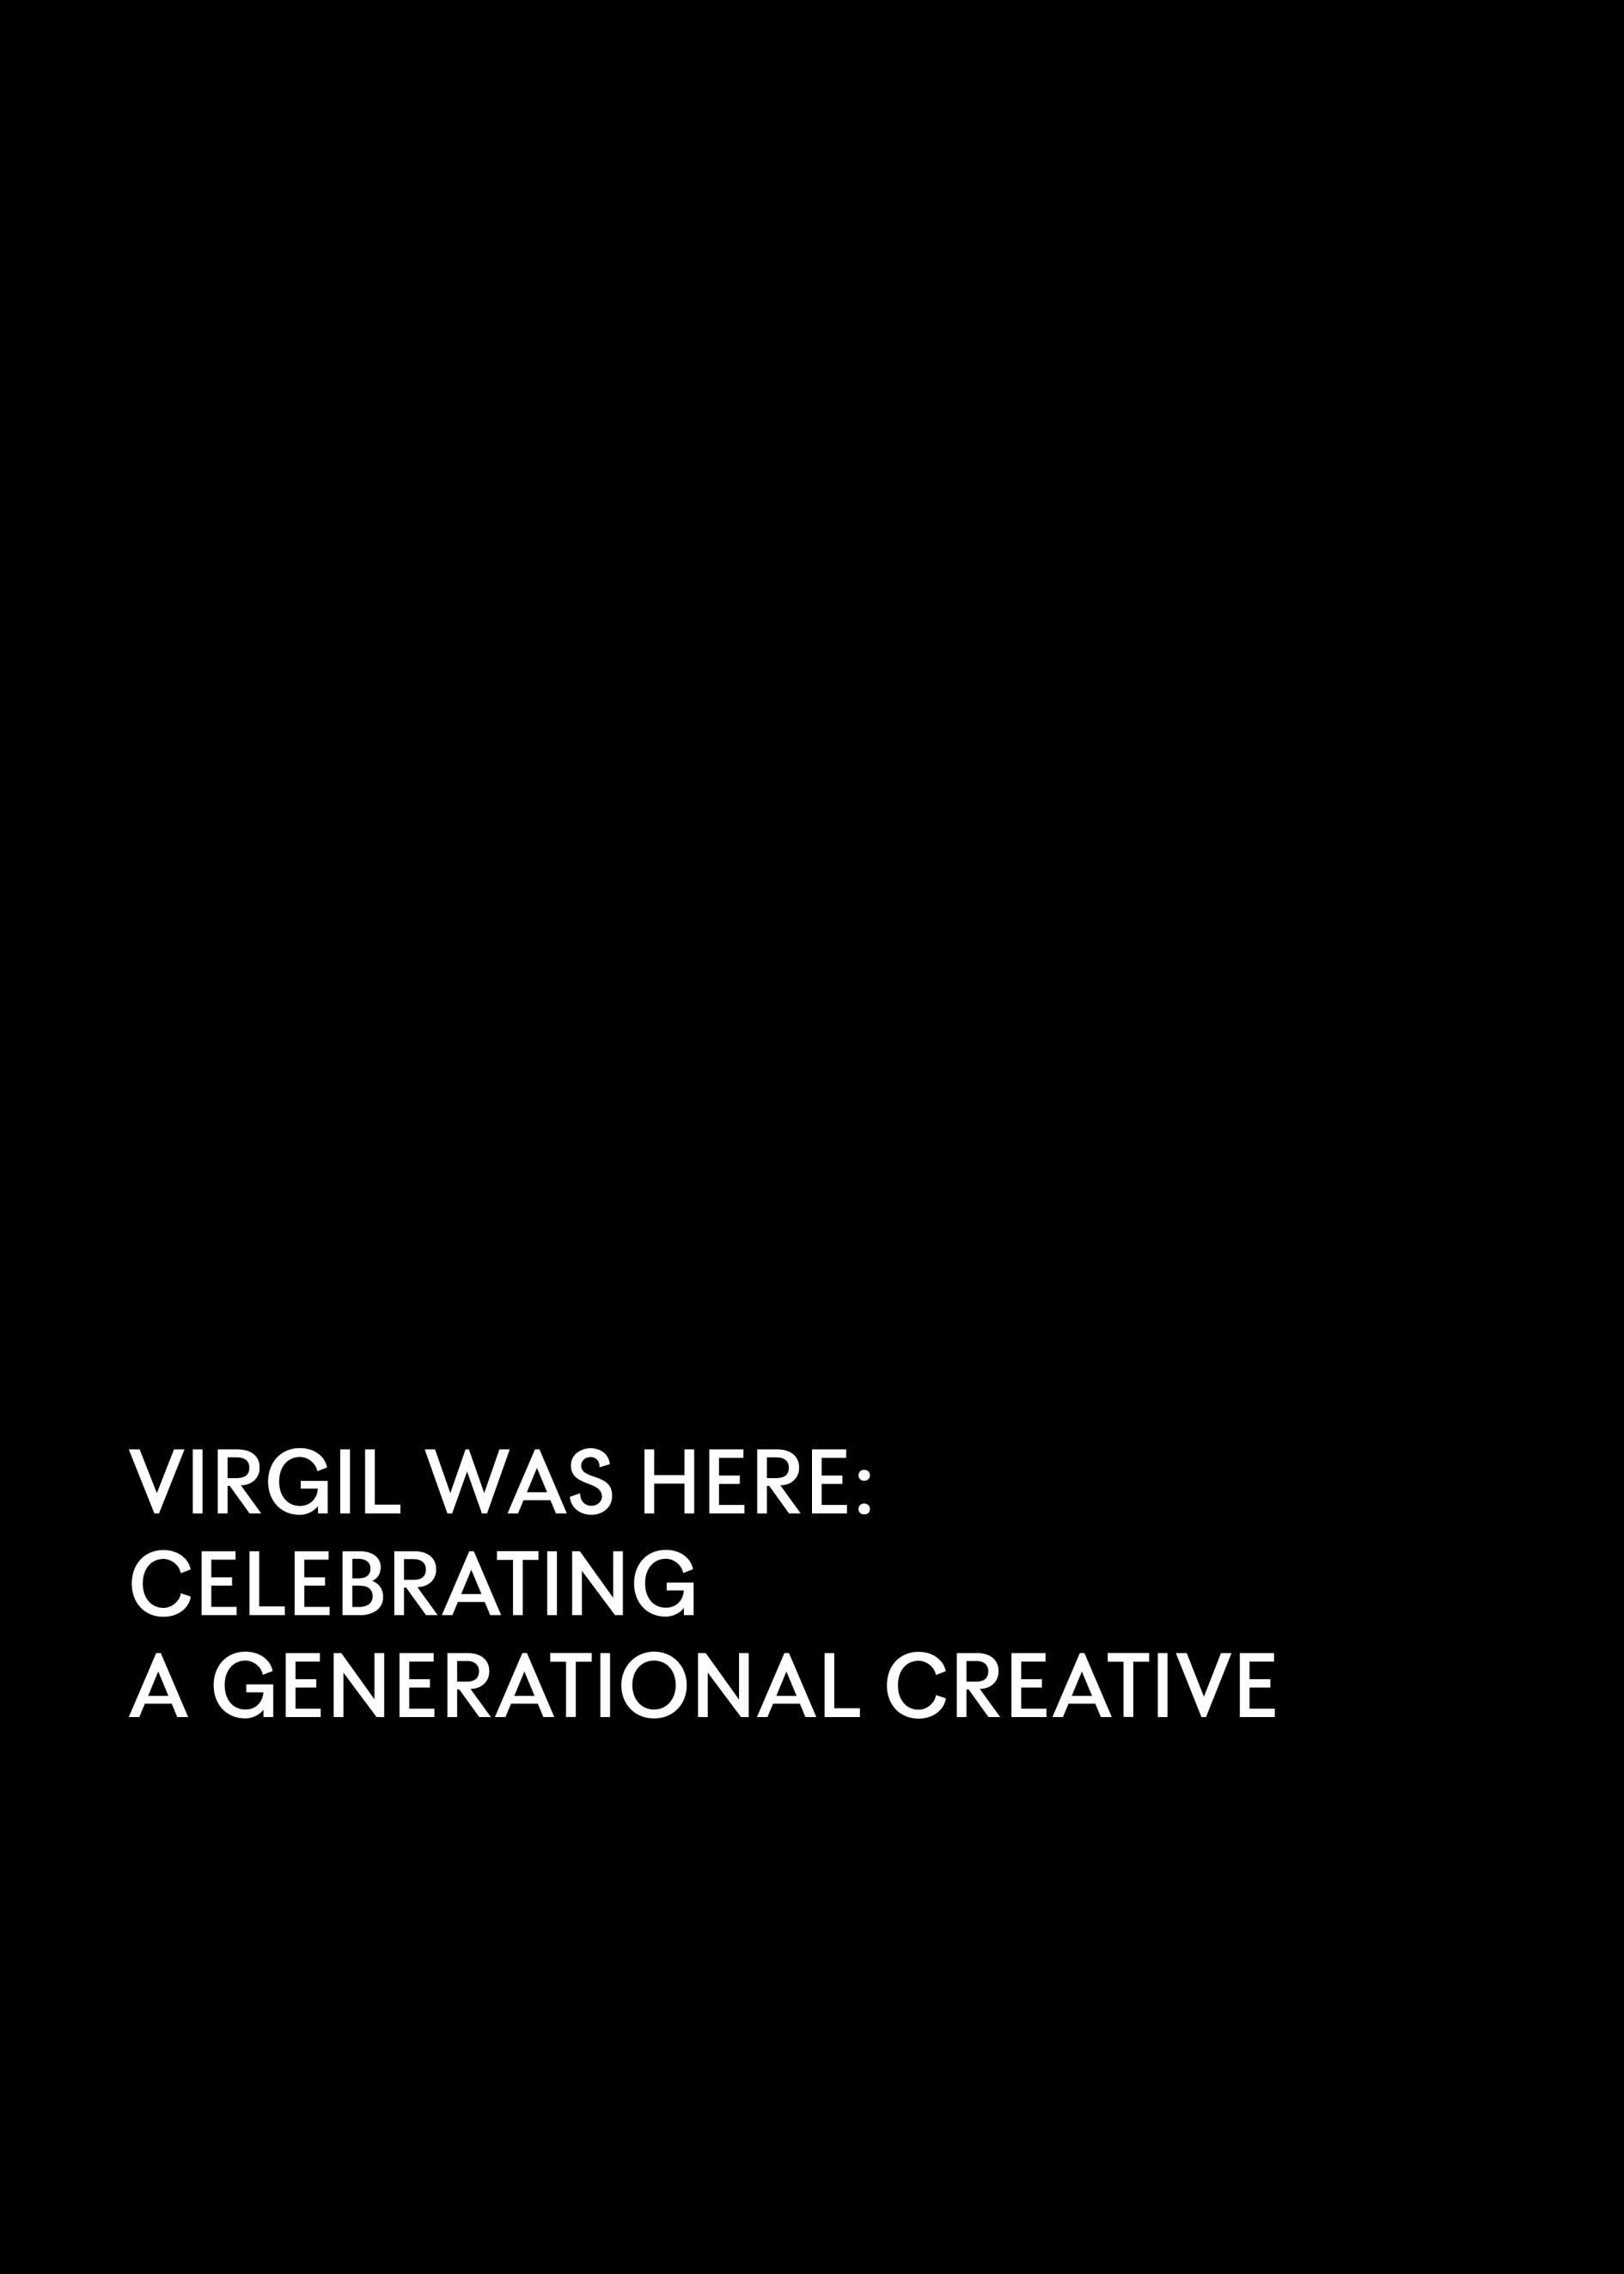 Virgil was here: celebrating a generational creative - Community